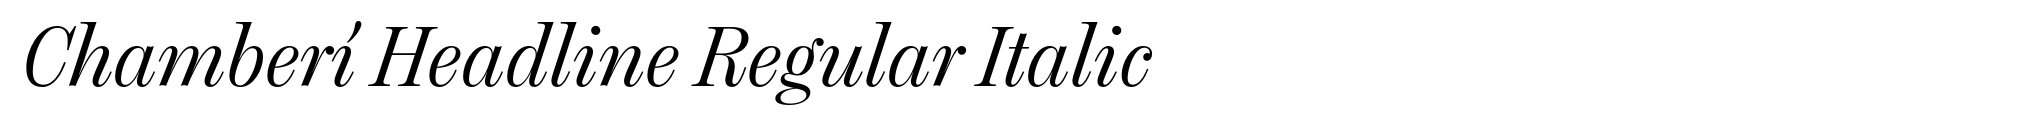 Chamberí Headline Regular Italic image